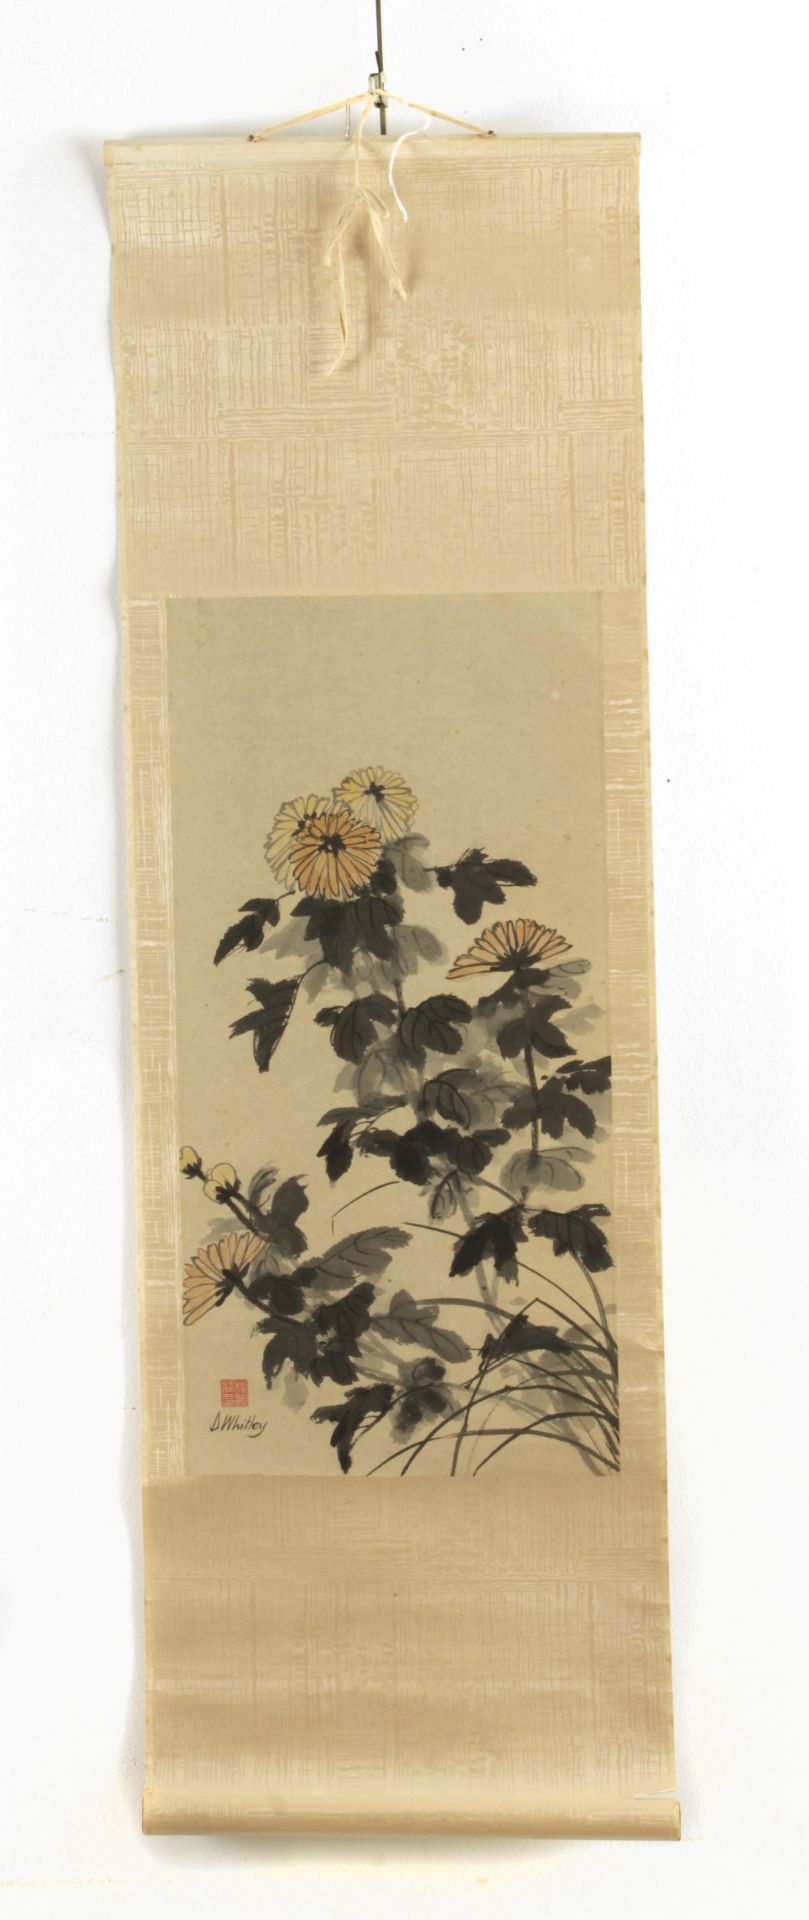 A 20th century Chinese scroll depicting chrysanthemum